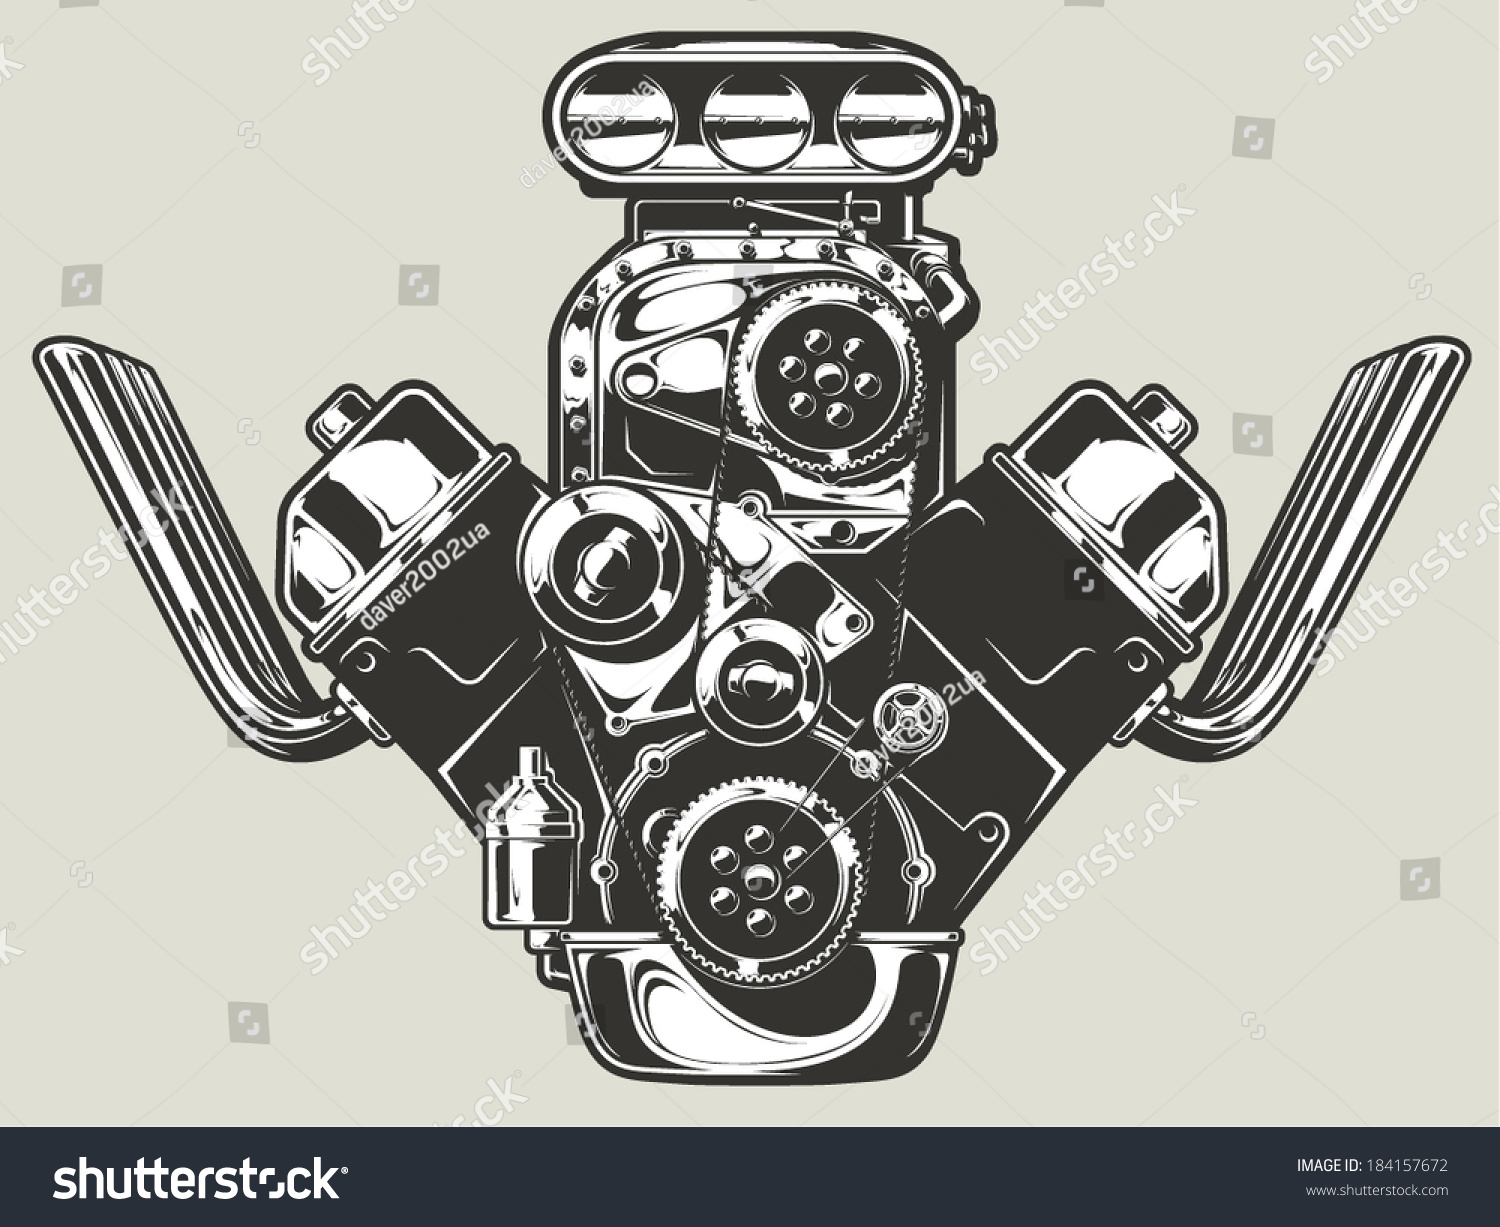 clipart car engine - photo #46